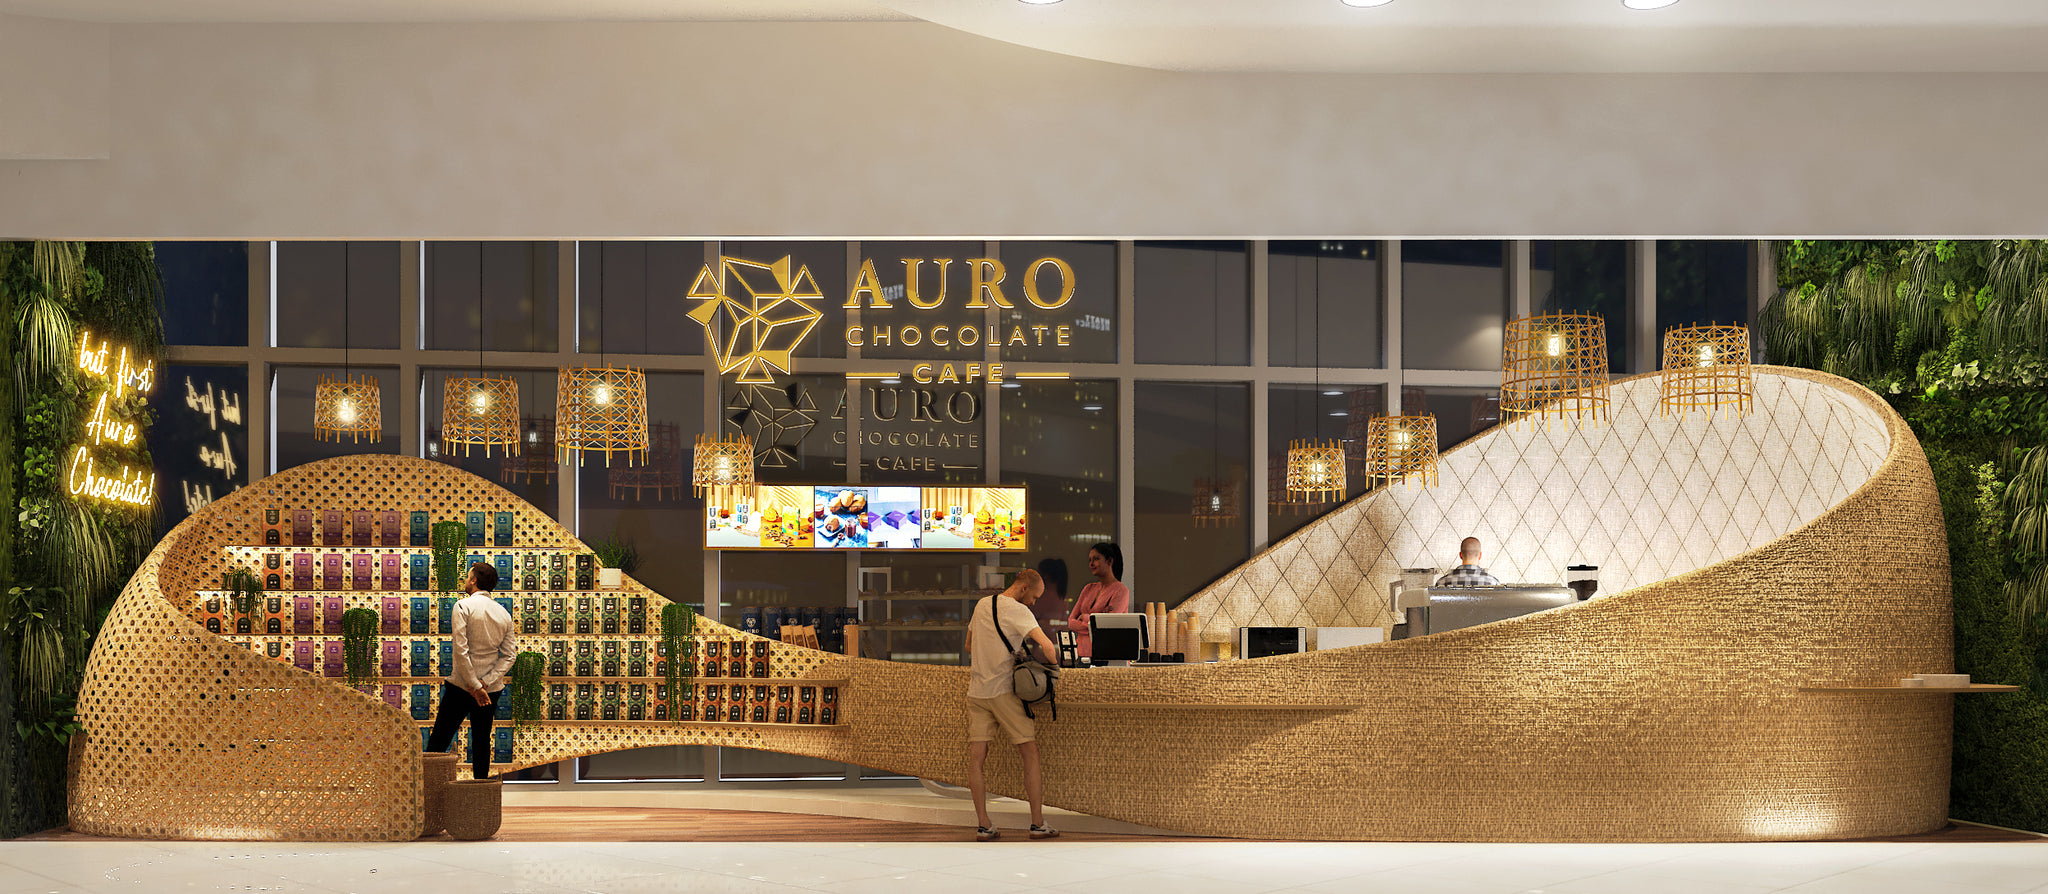 Auro Chocolate Cafe Grab & Go Concept